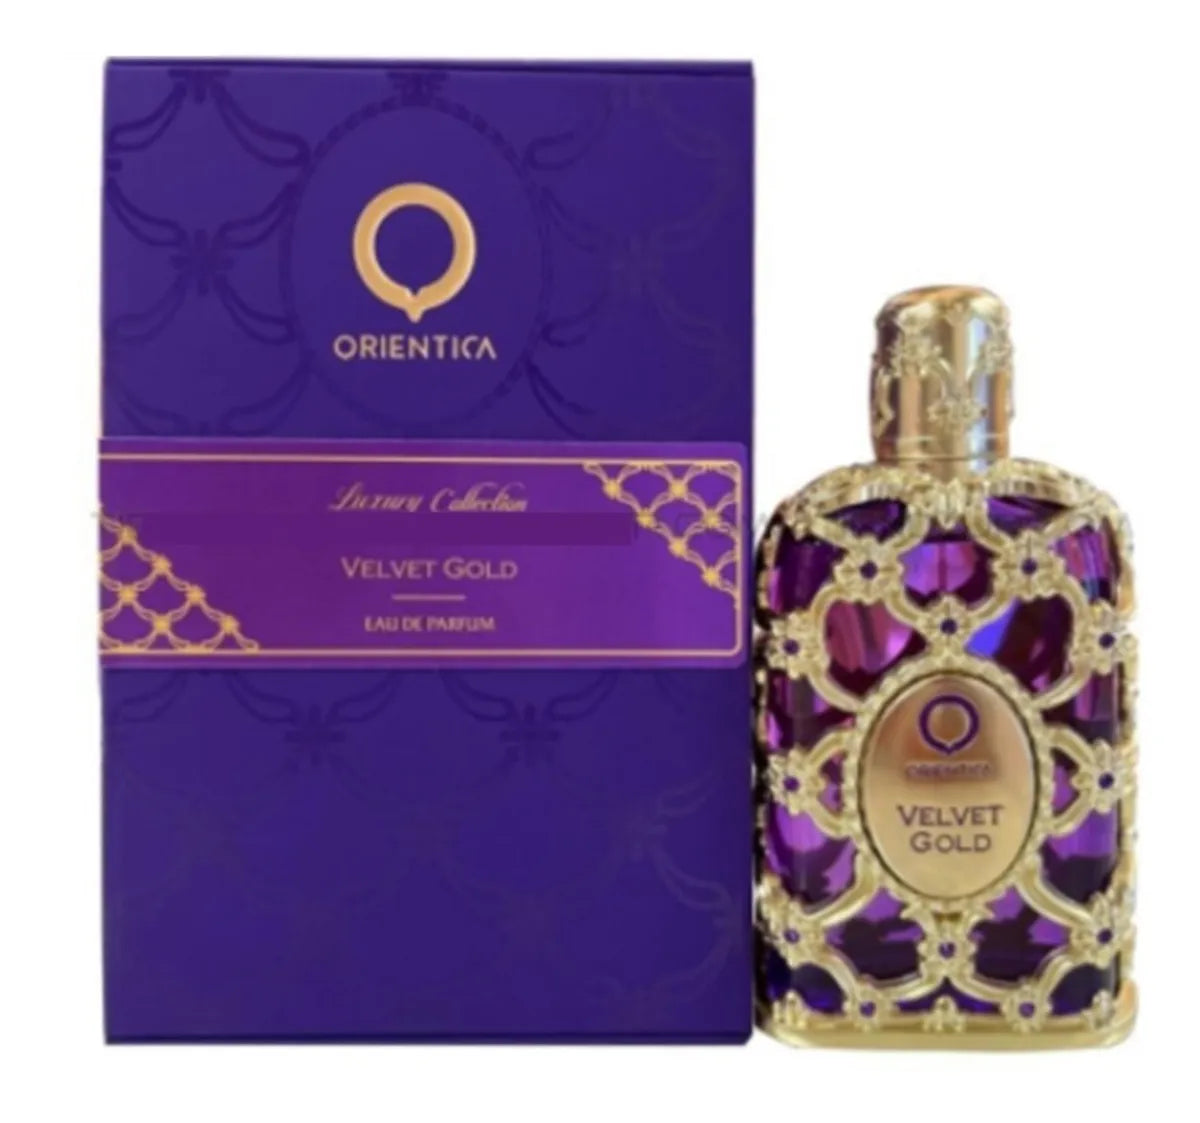 Perfume Velvet Gold Orientica